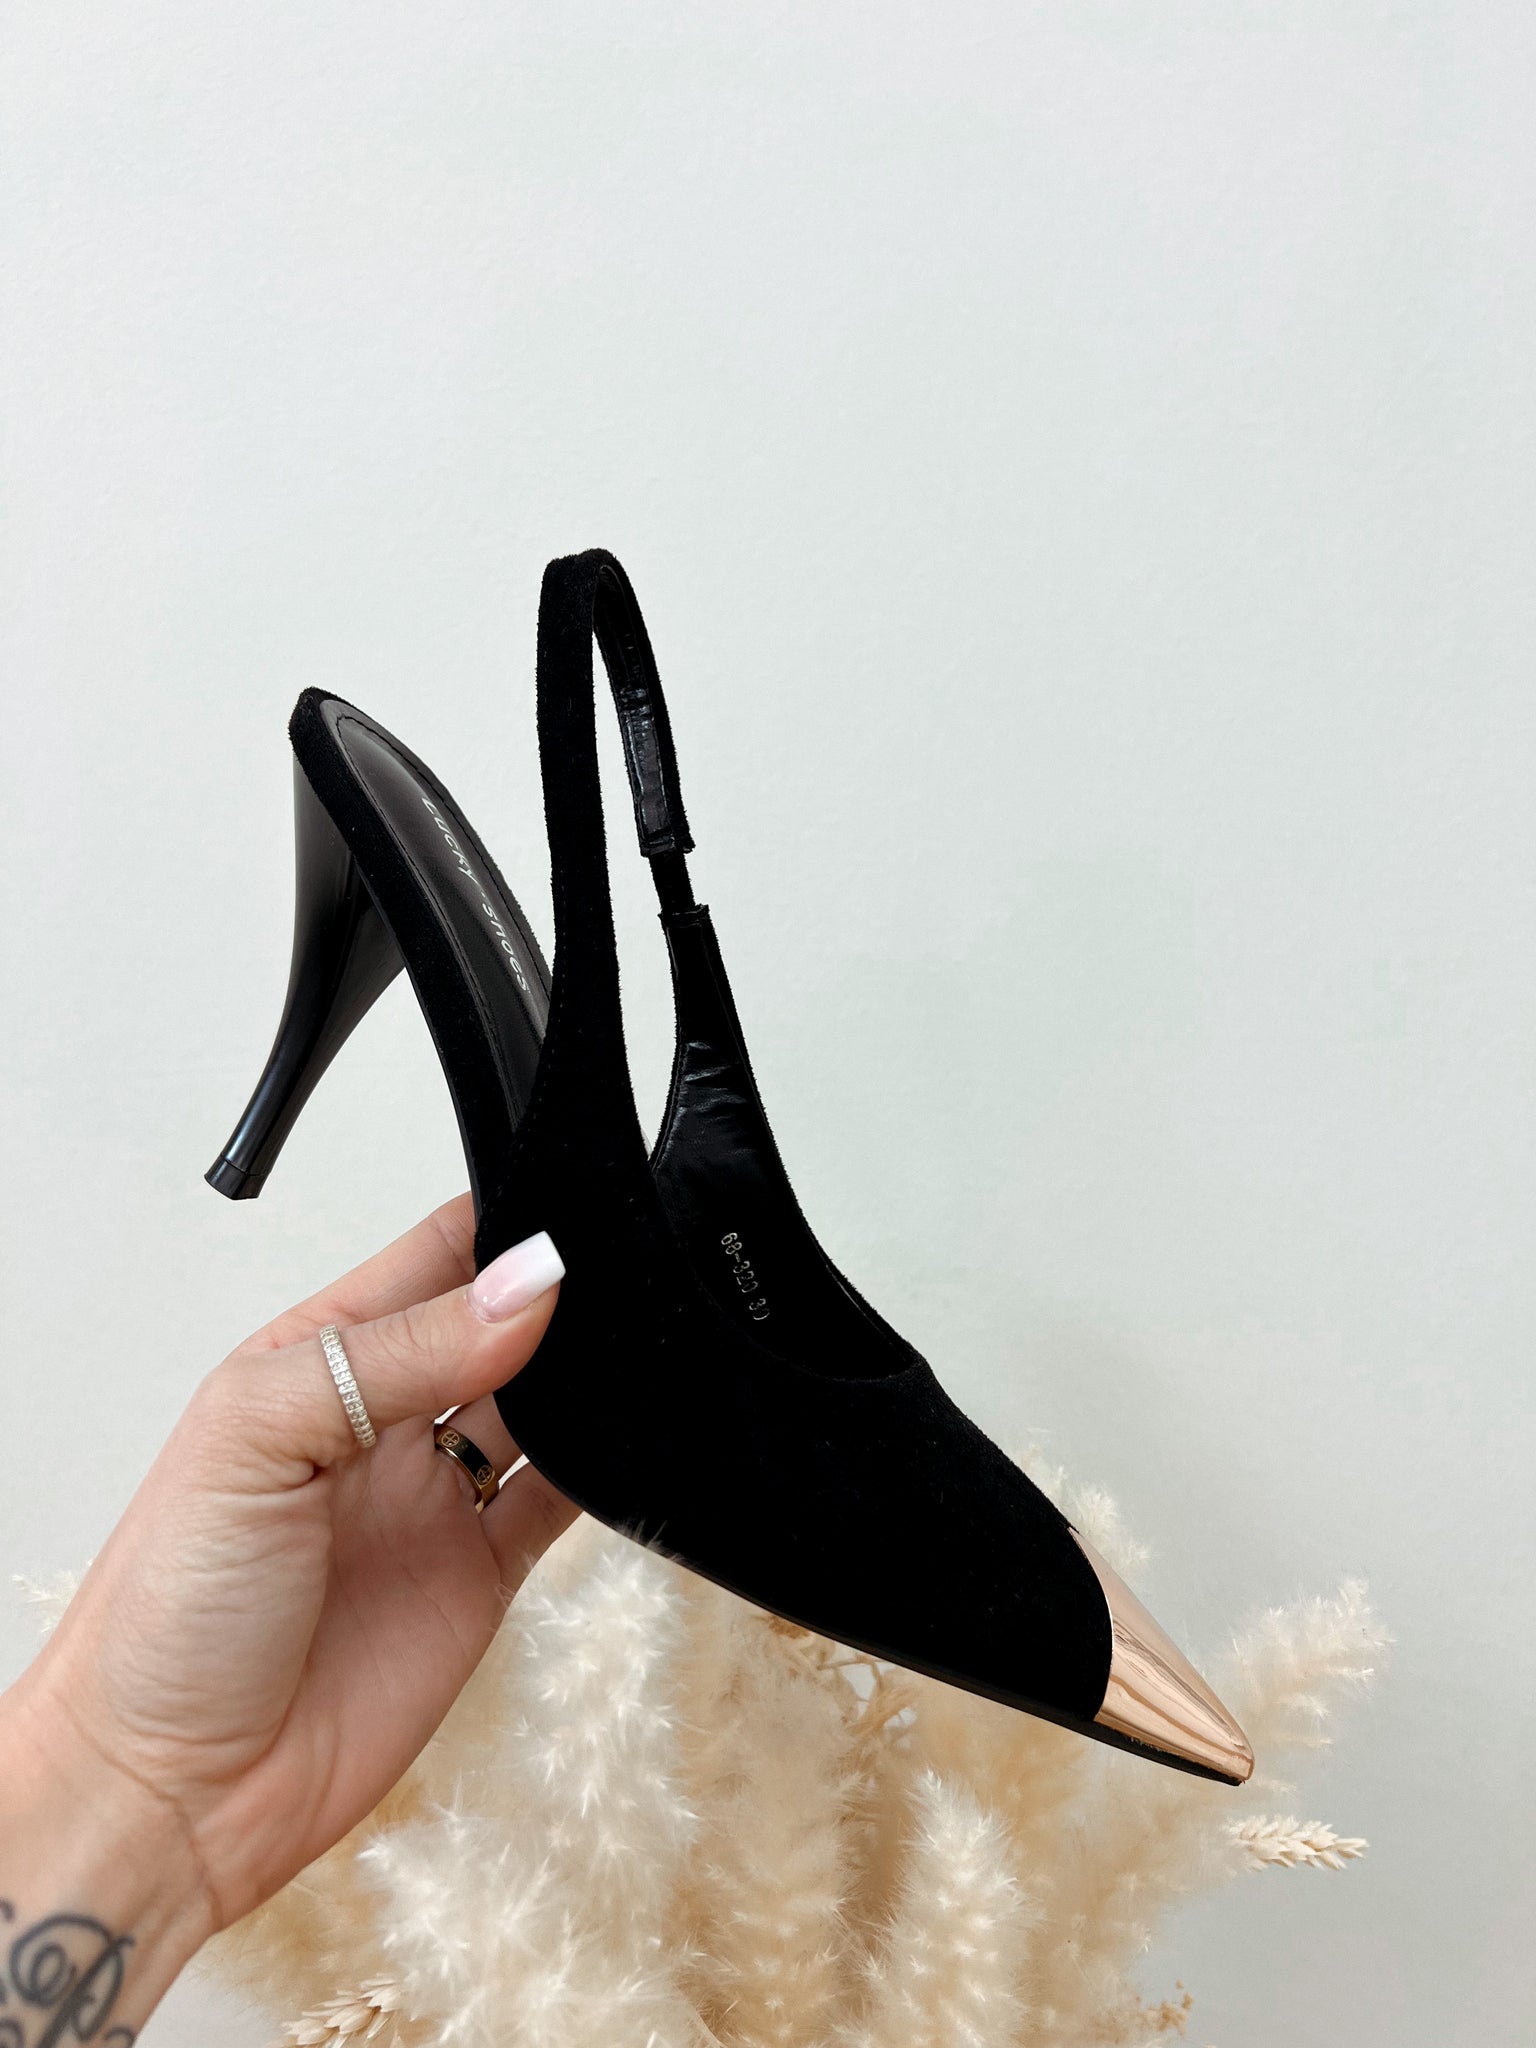 high heels 'glamour'